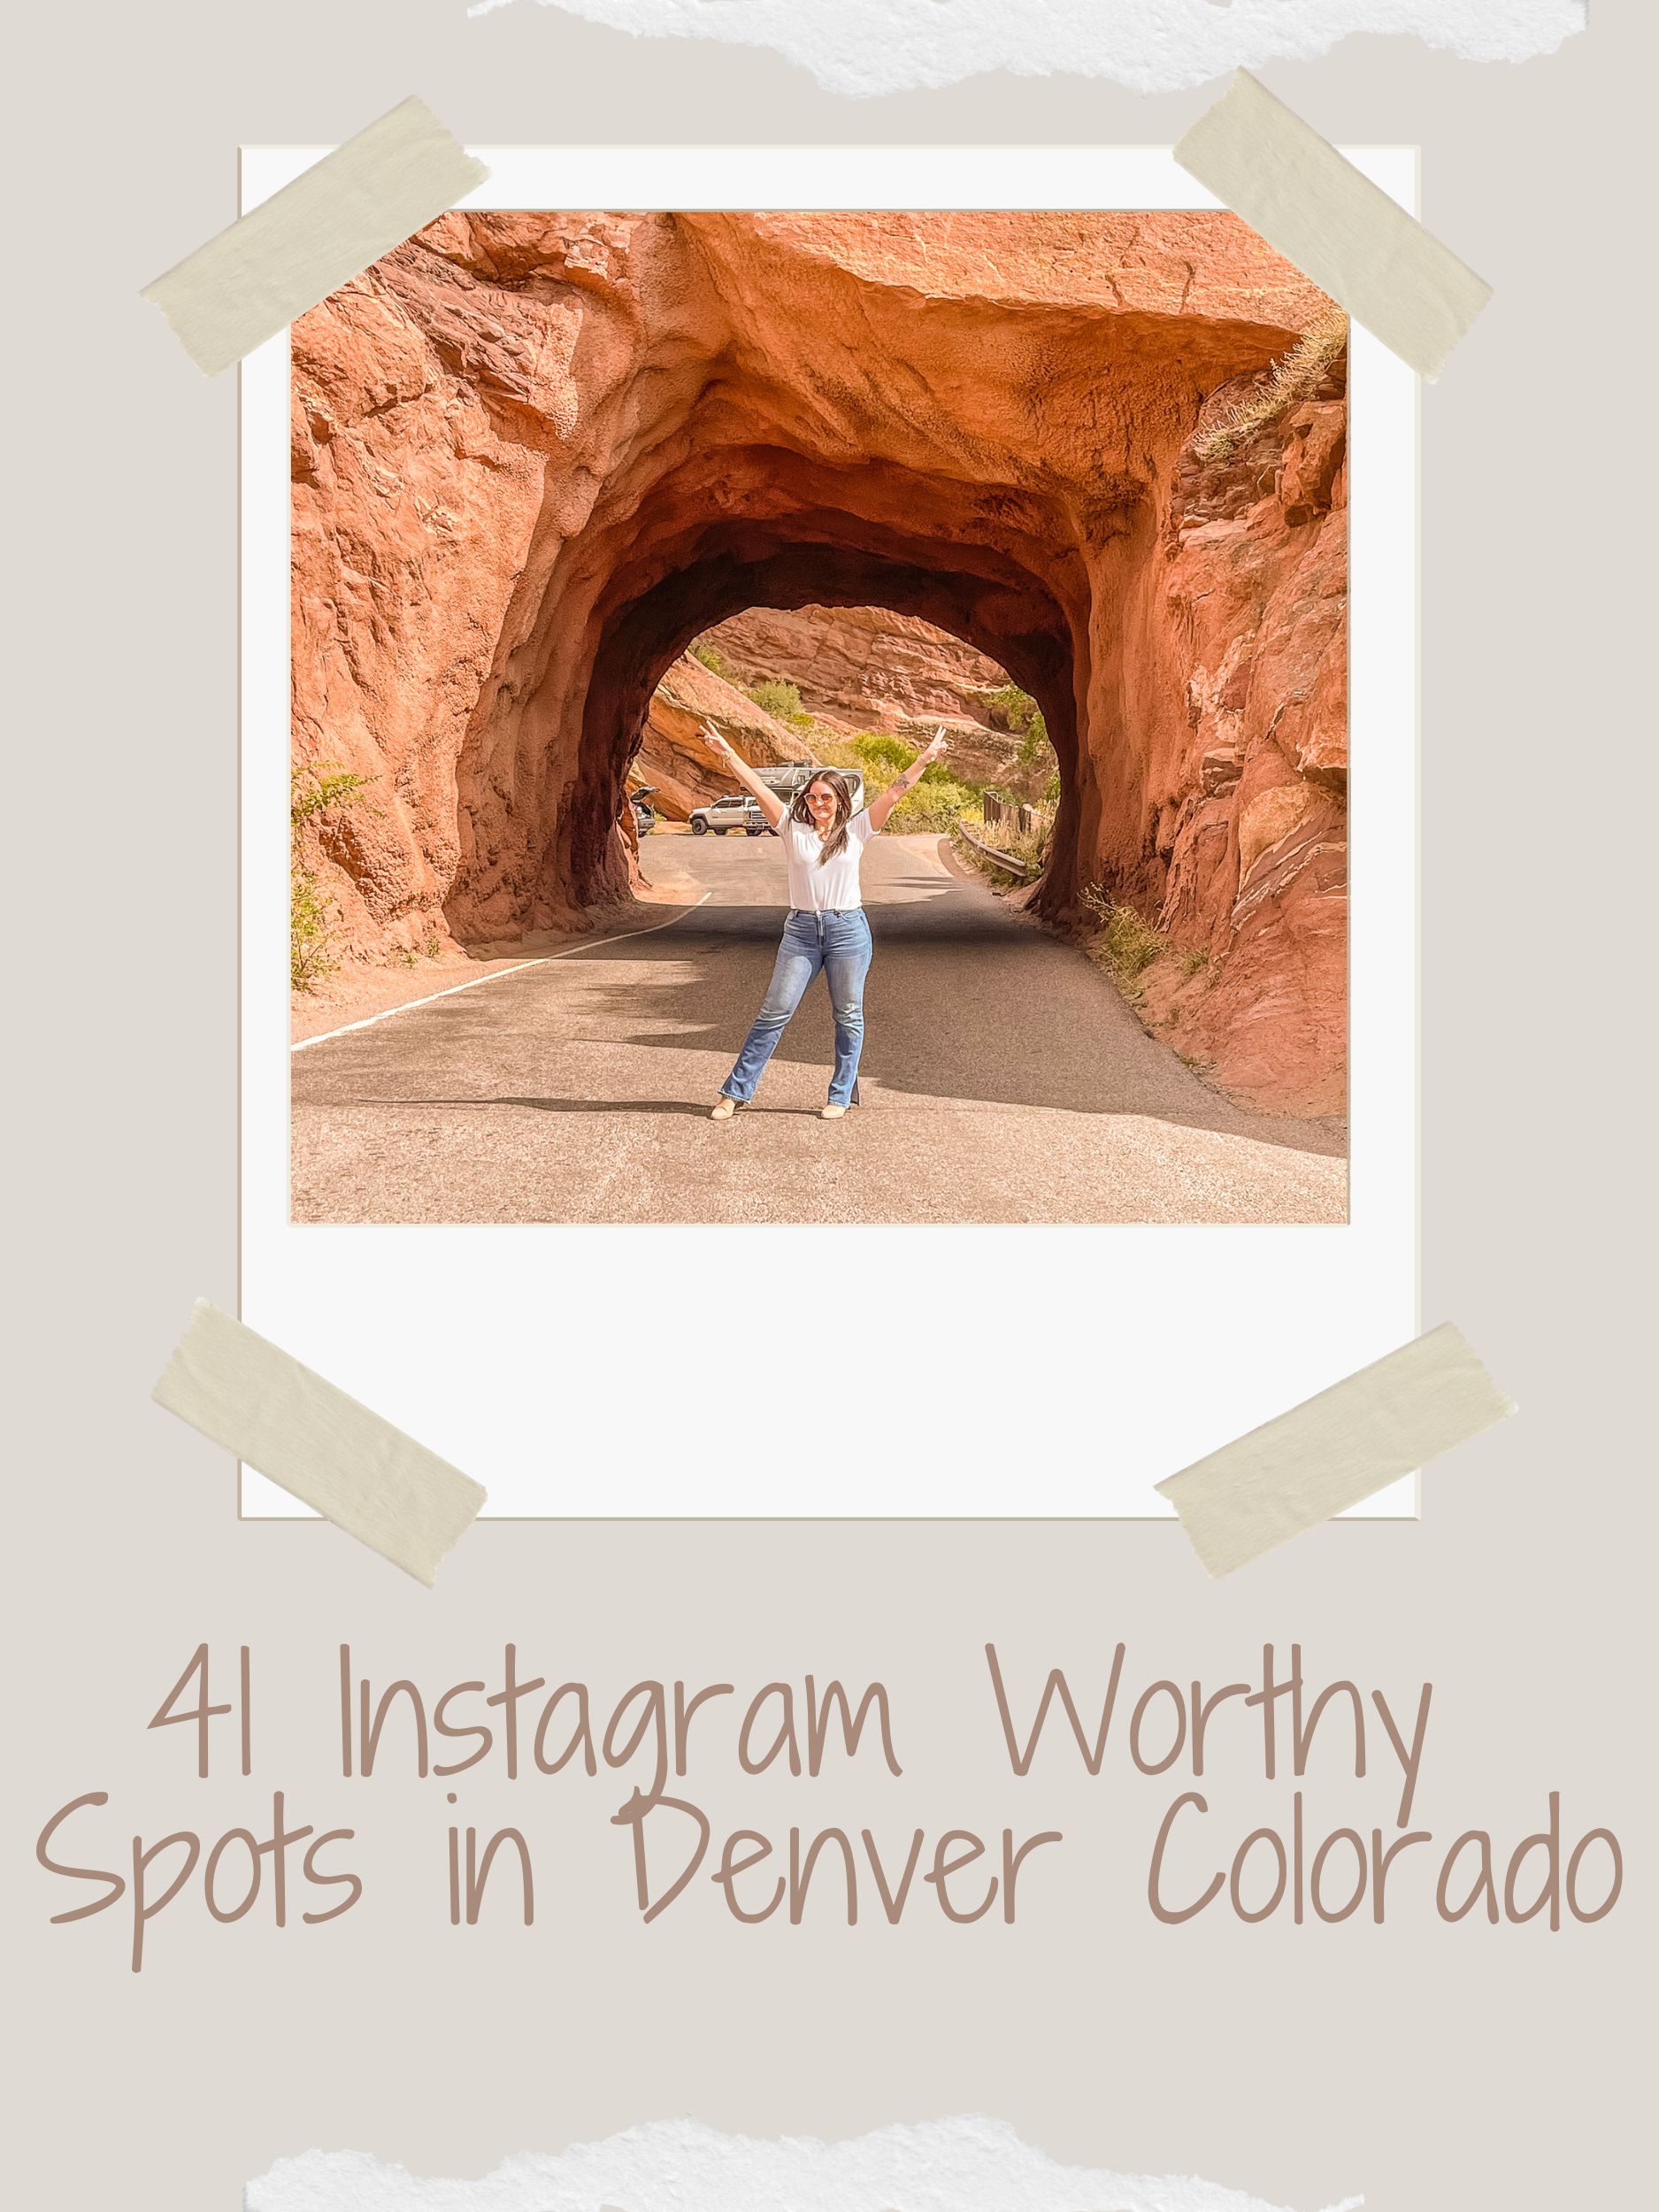 41 Instagram Worthy Spots in Denver Colorado - The Passport to Paradise